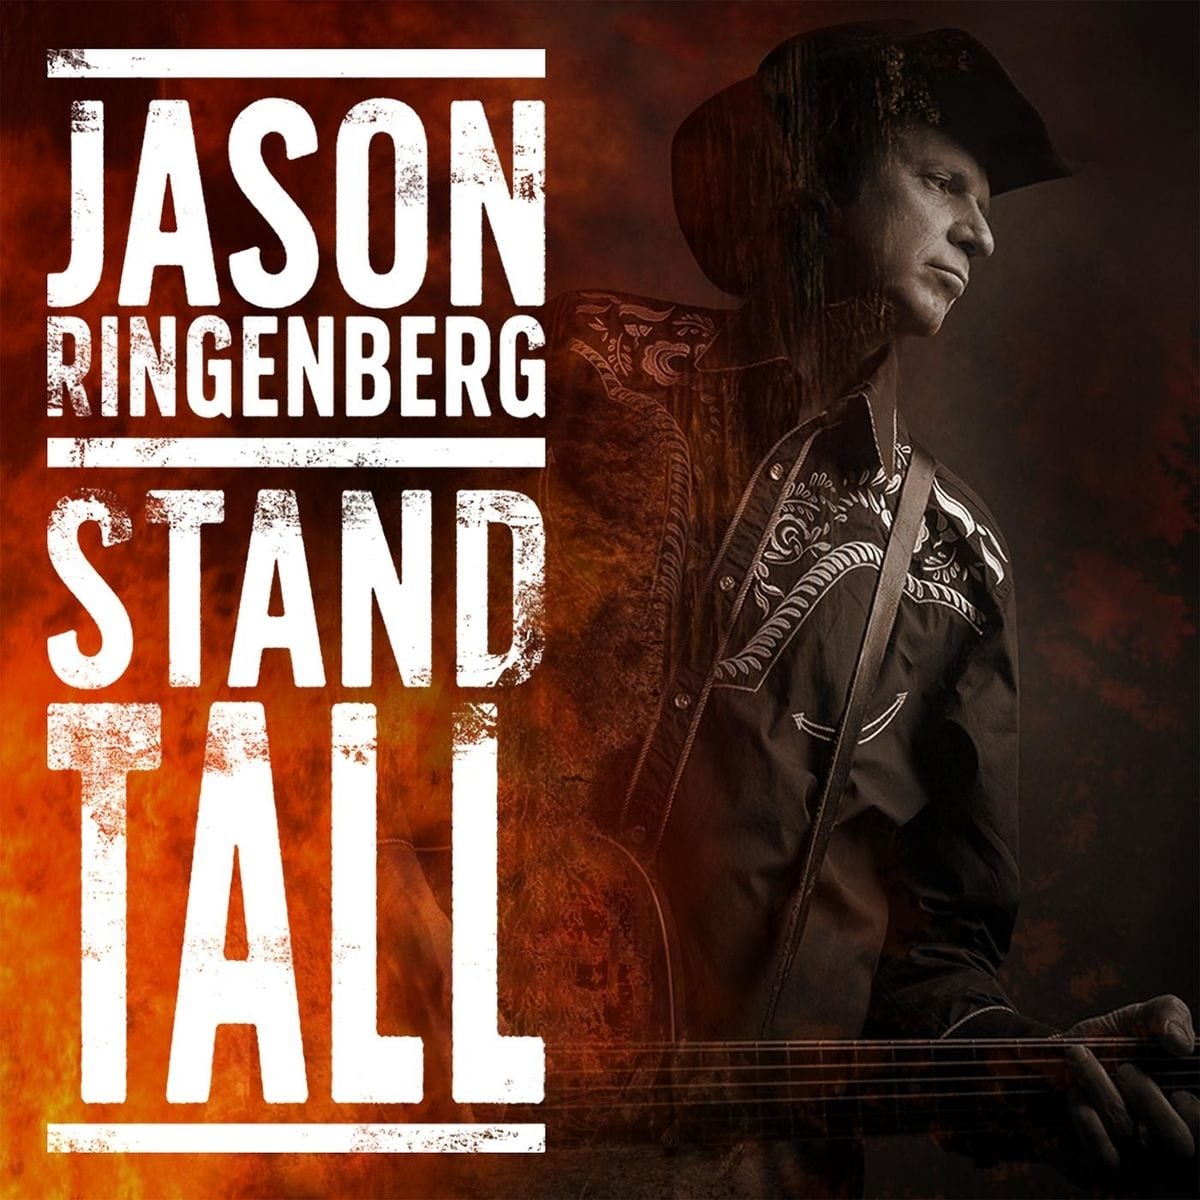 JASON RINGENBERG – Stand Tall